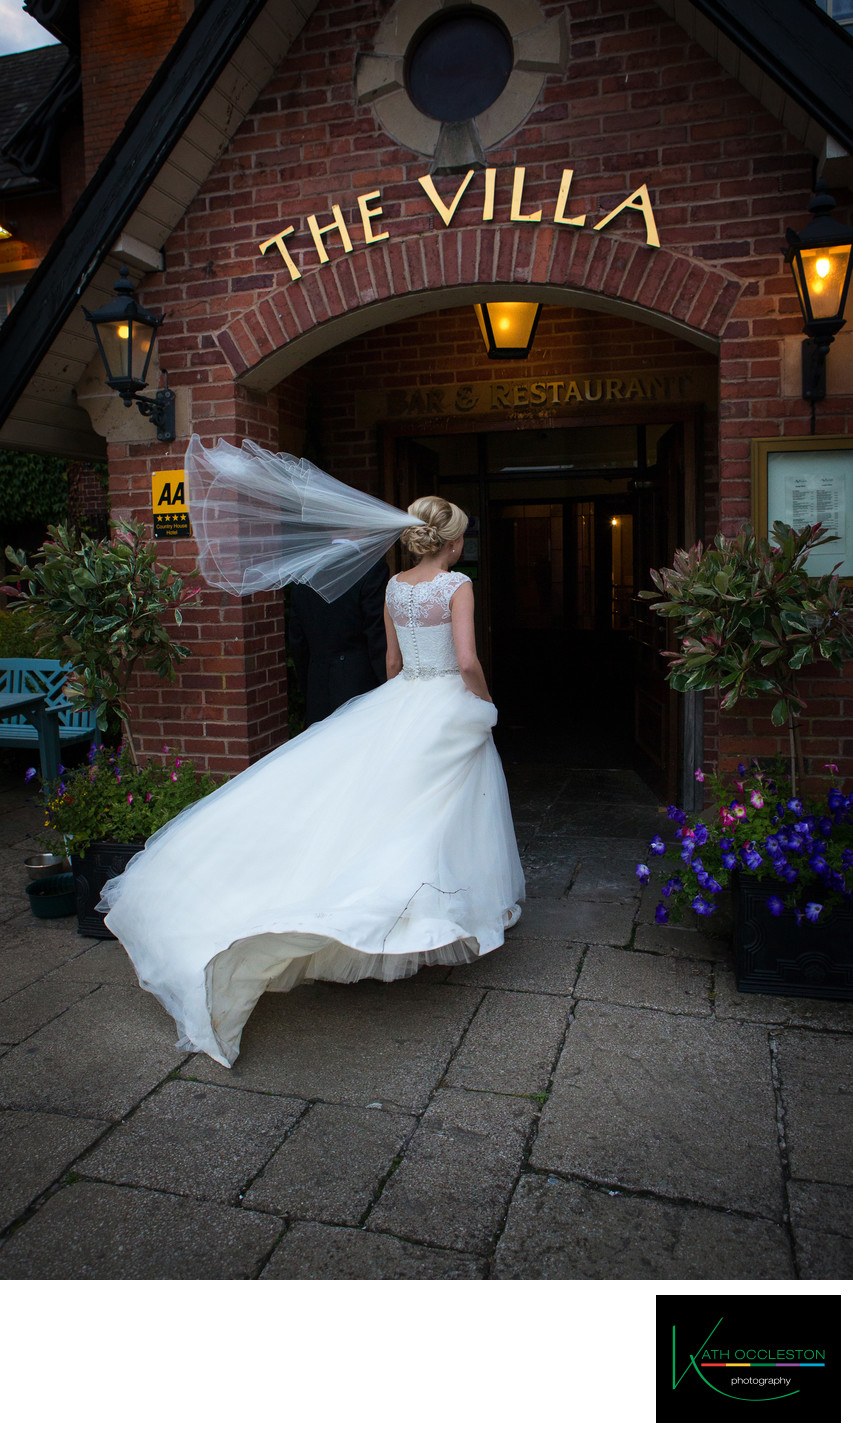 Bride's veil blowing at The Villa